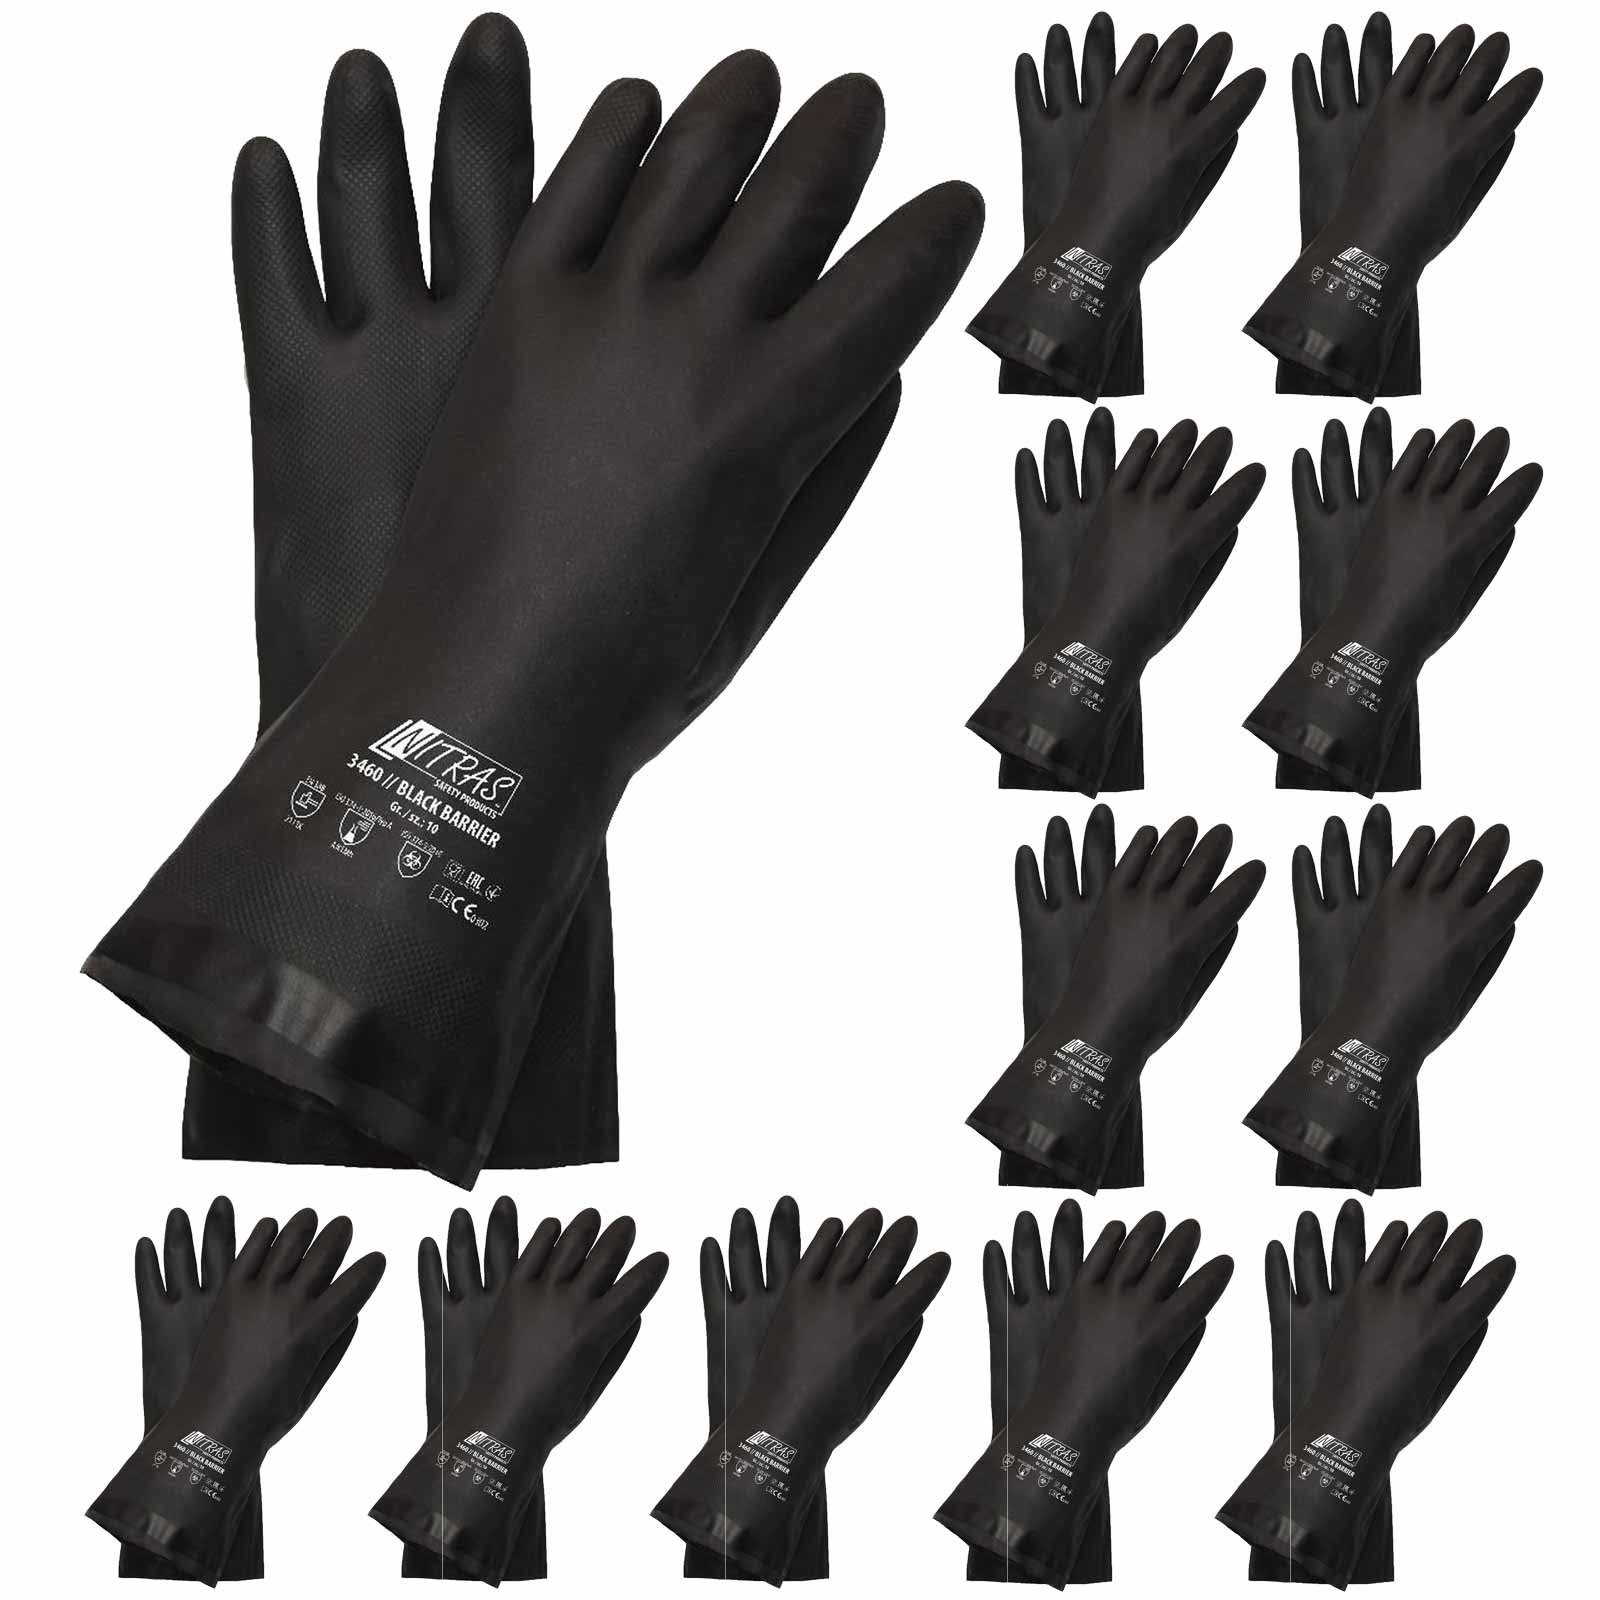 Nitras Putzhandschuh Chloroprene-Handschuhe 3460 Black Barrier - 12 Paar (Set)